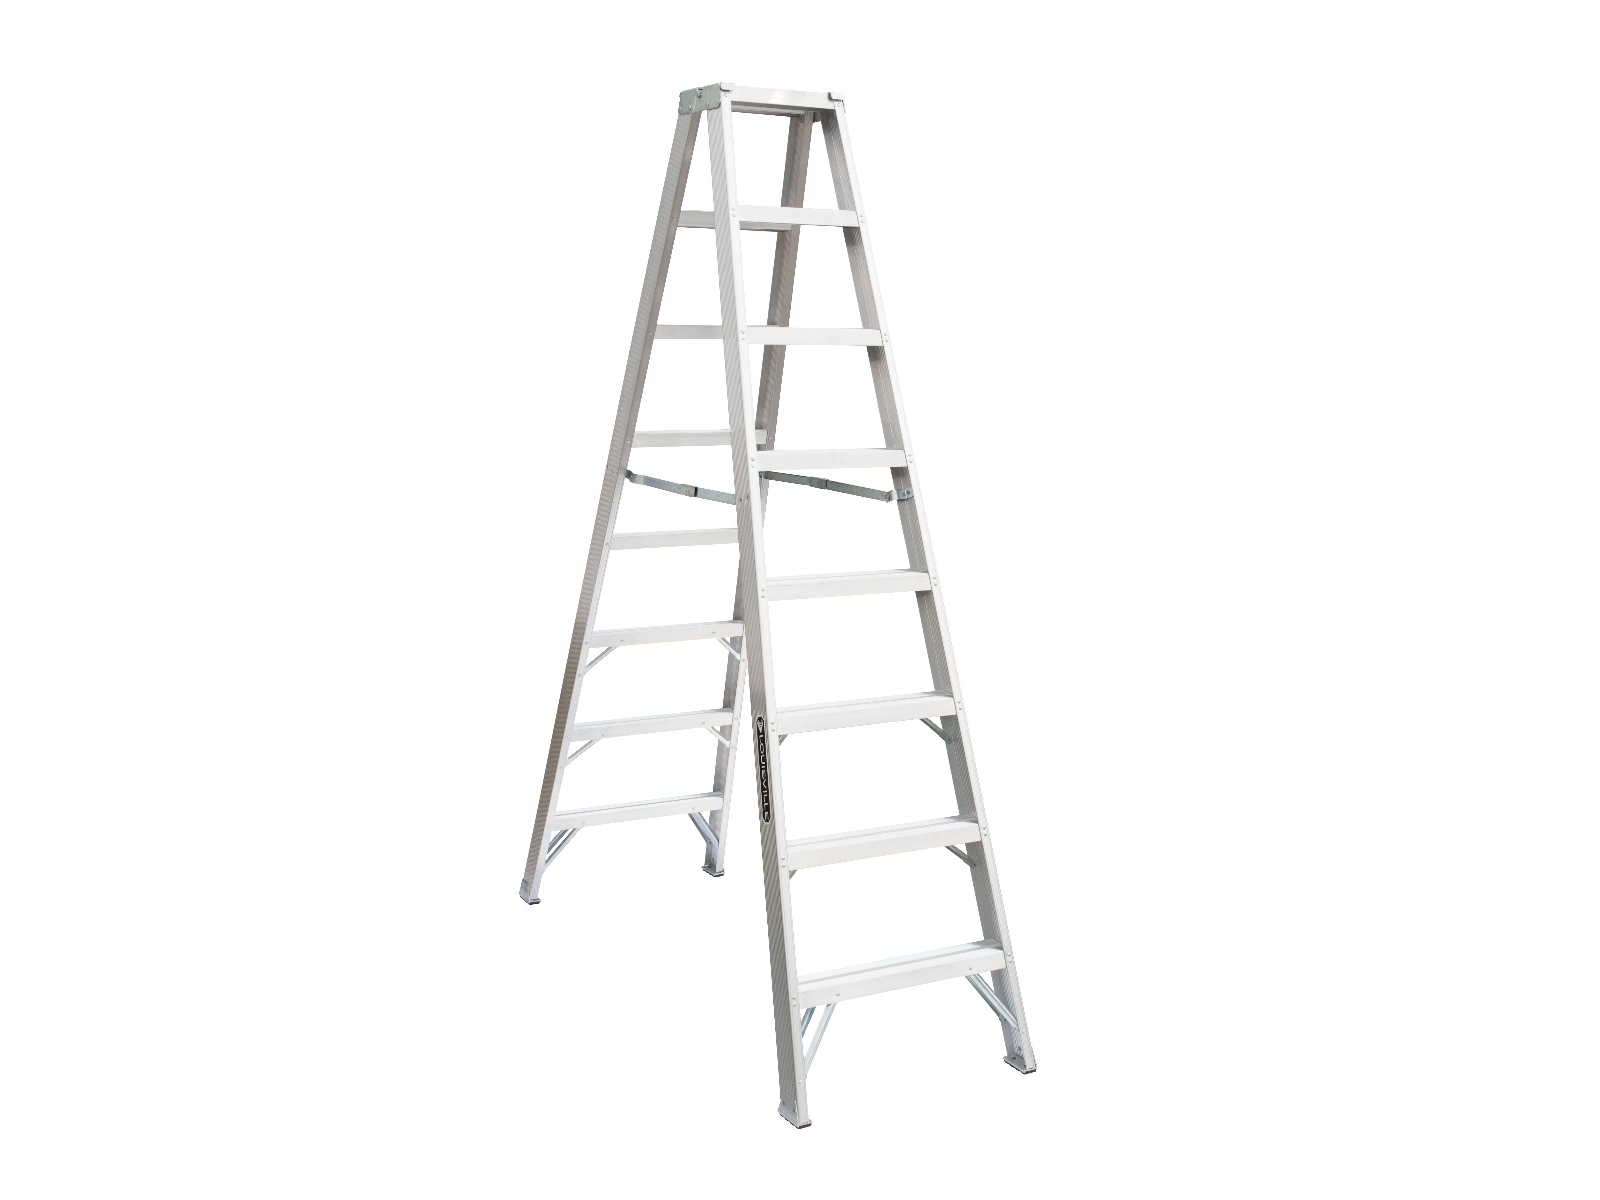 8' step ladder